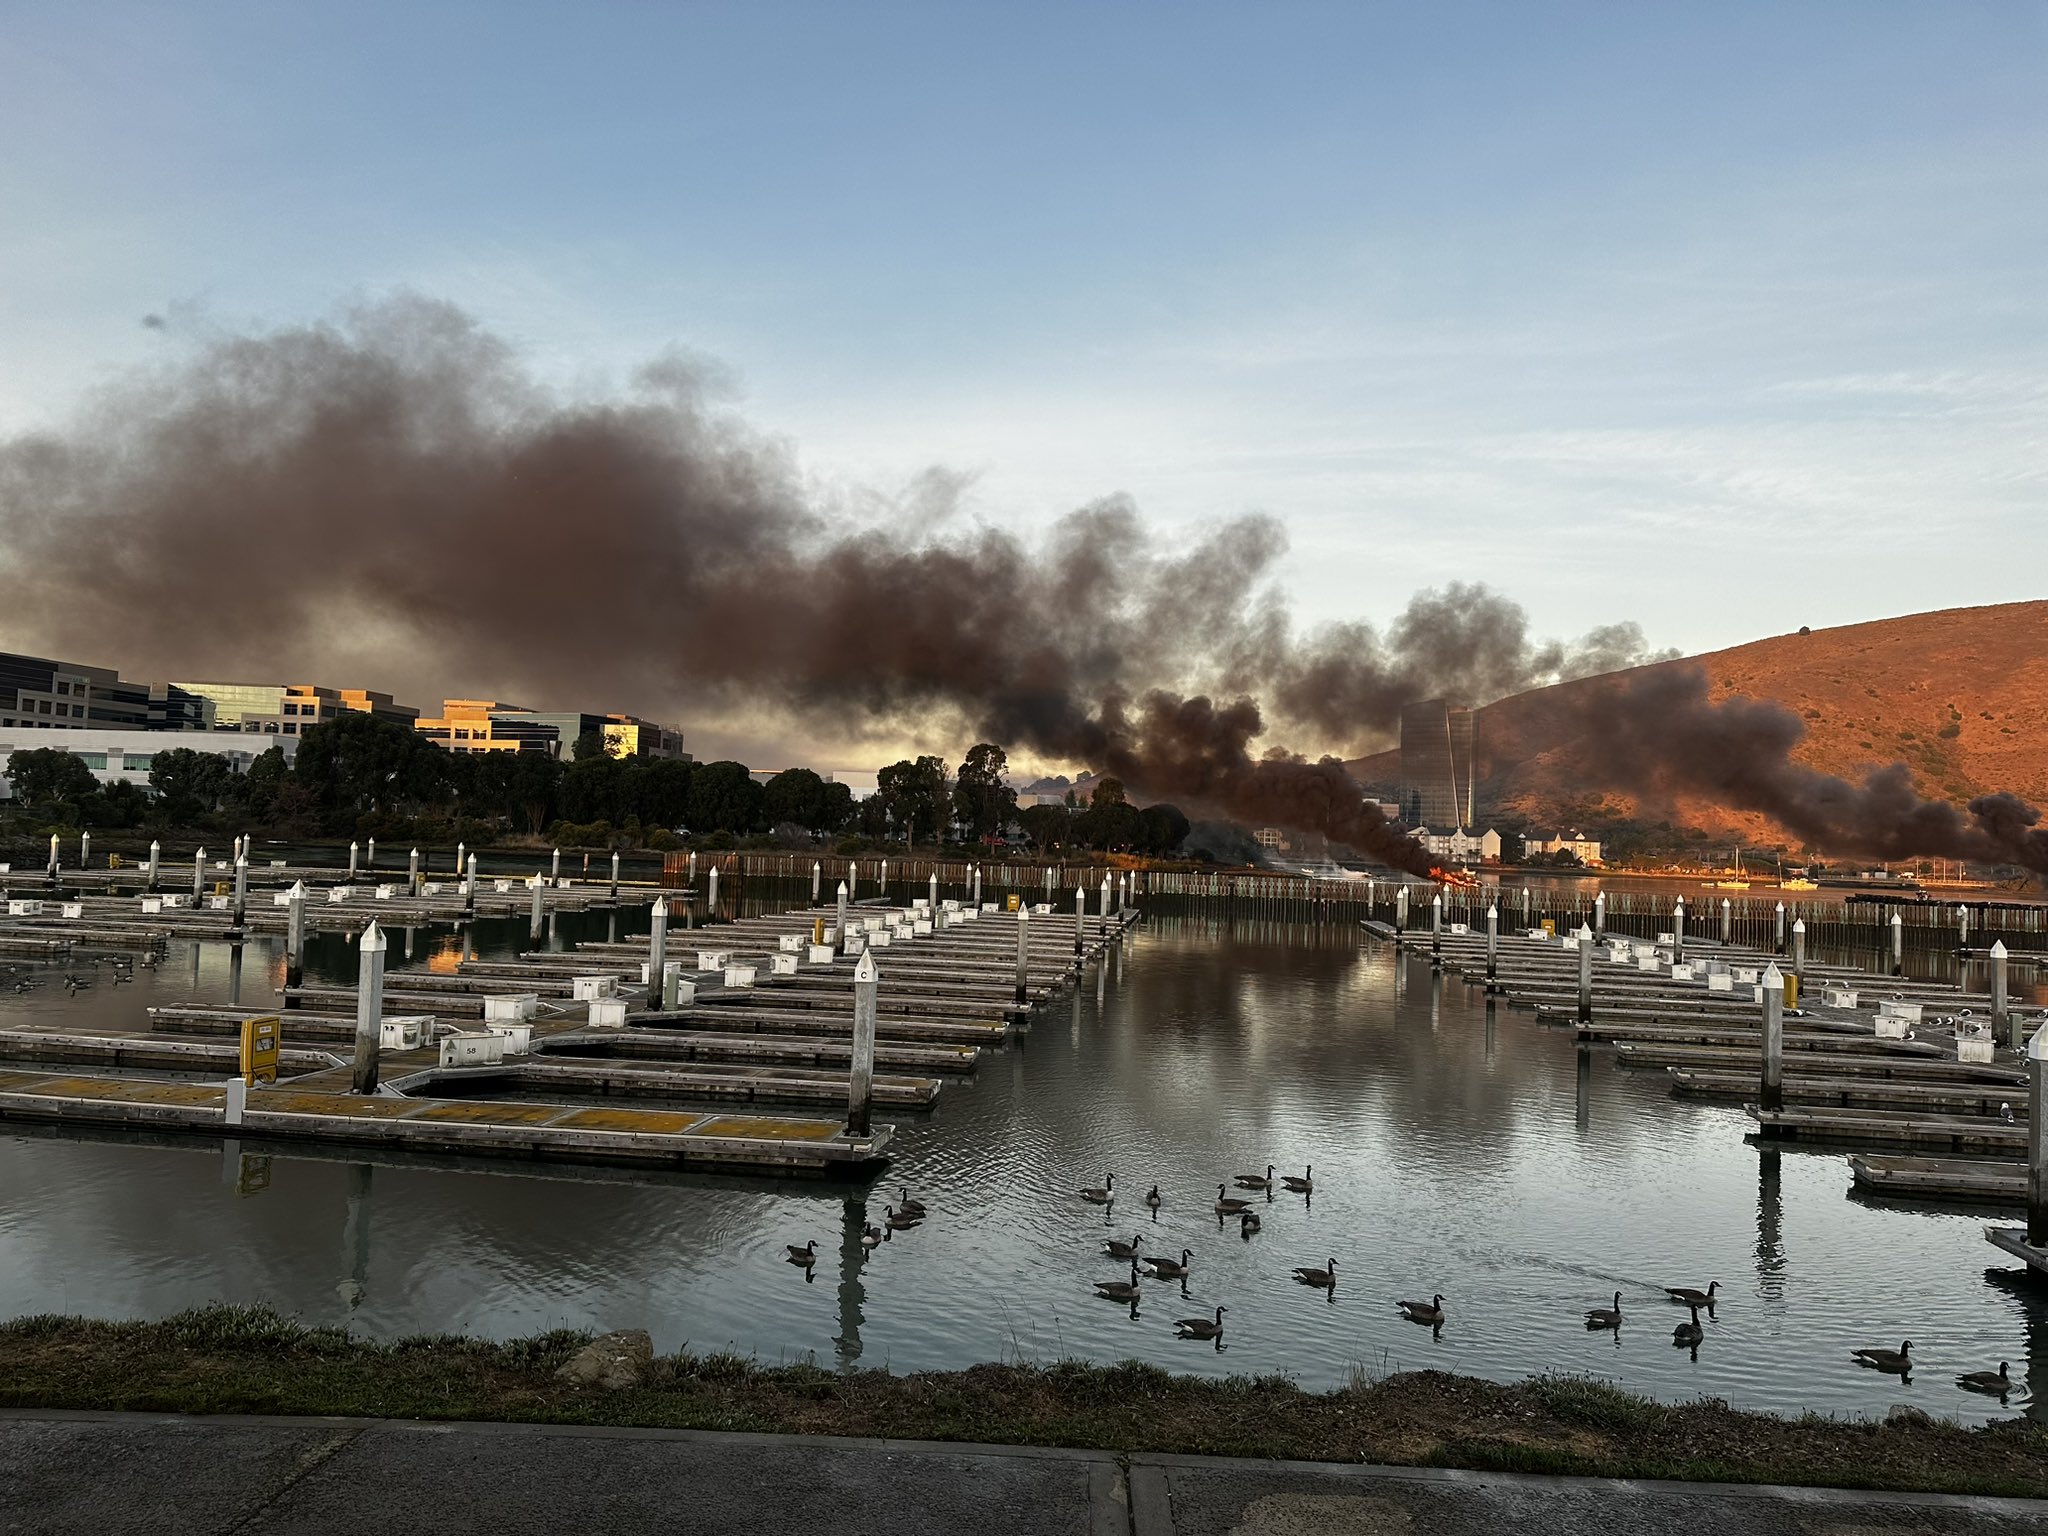 Passengers Jumped From 3 Boat Fires at South San Francisco Marina